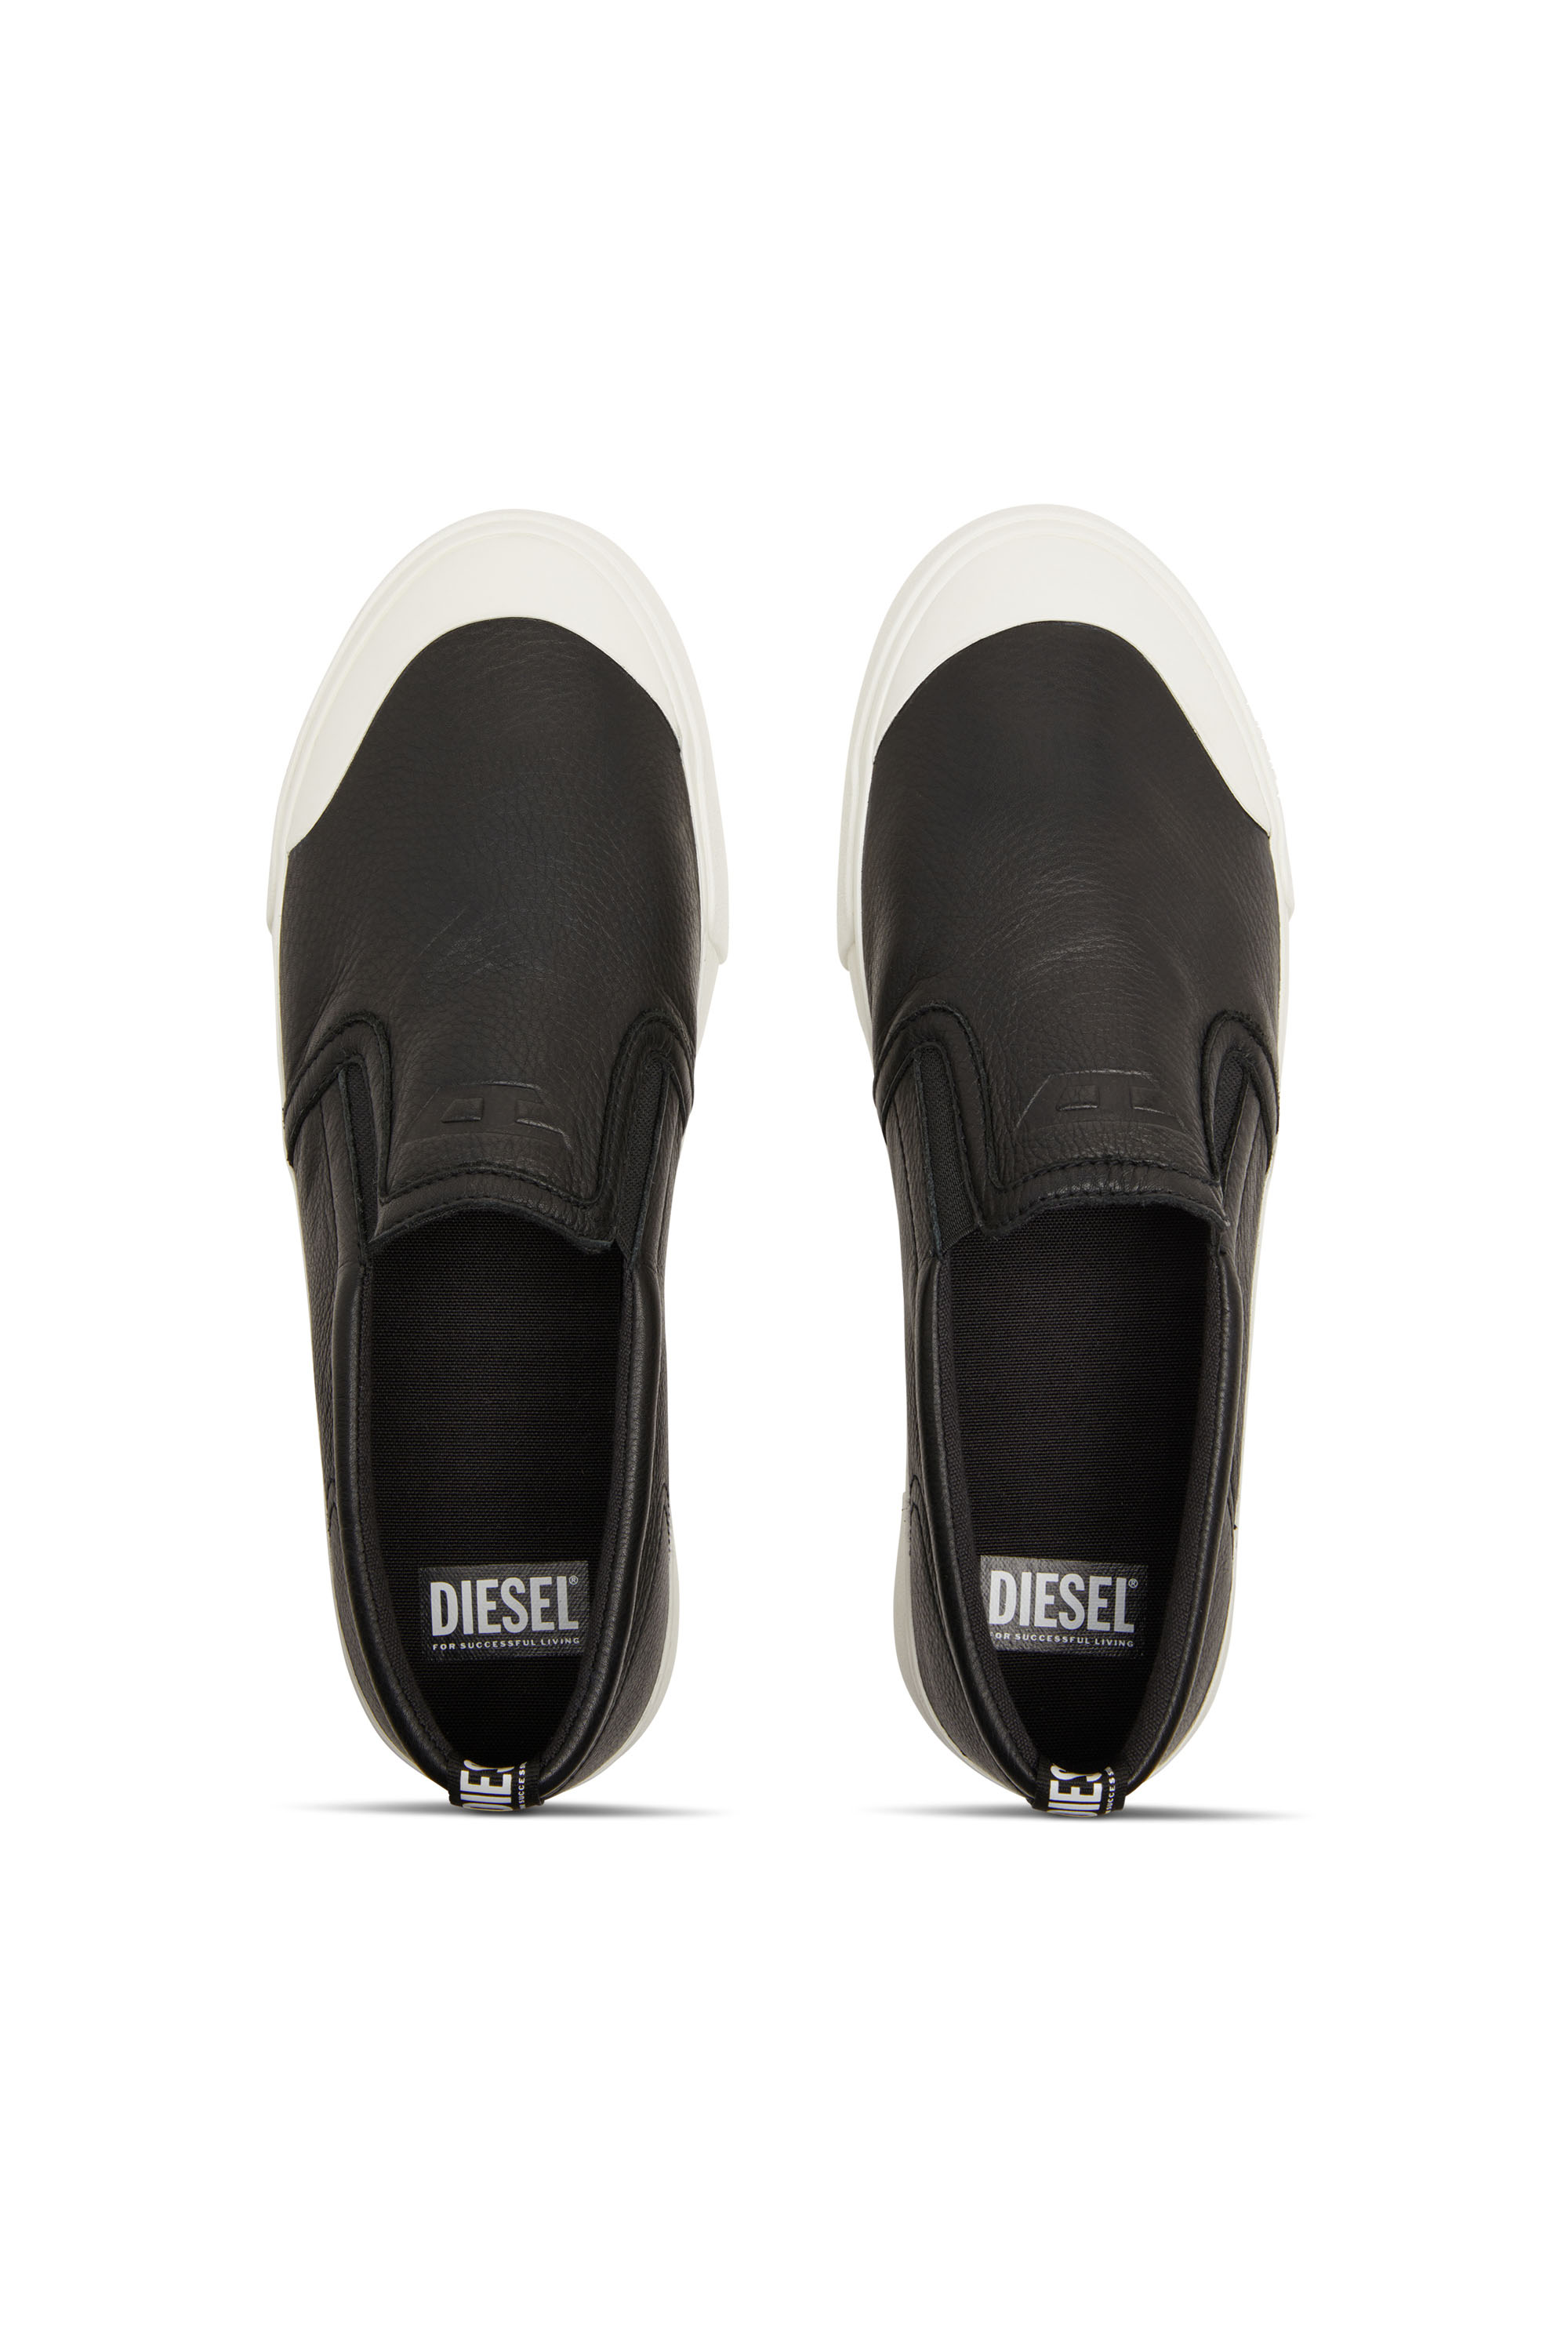 Diesel - S-ATHOS SLIP ON, Male S-Athos-Slip-on sneakers in plain leather in ブラック - Image 5